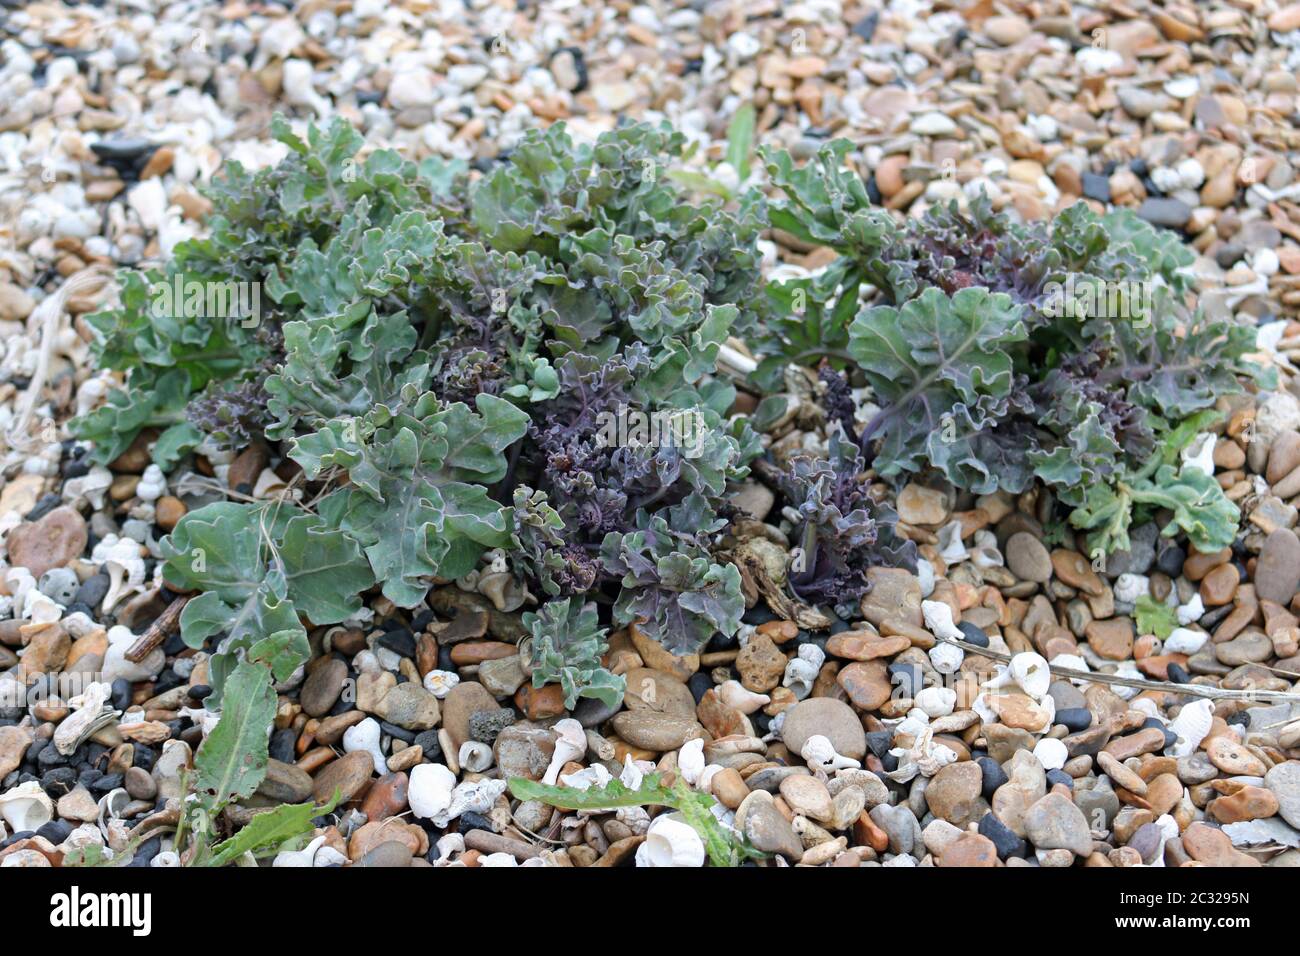 Sea kale (Crambe maritima) on a shingle beach with a background of pebbles and shells. Stock Photo